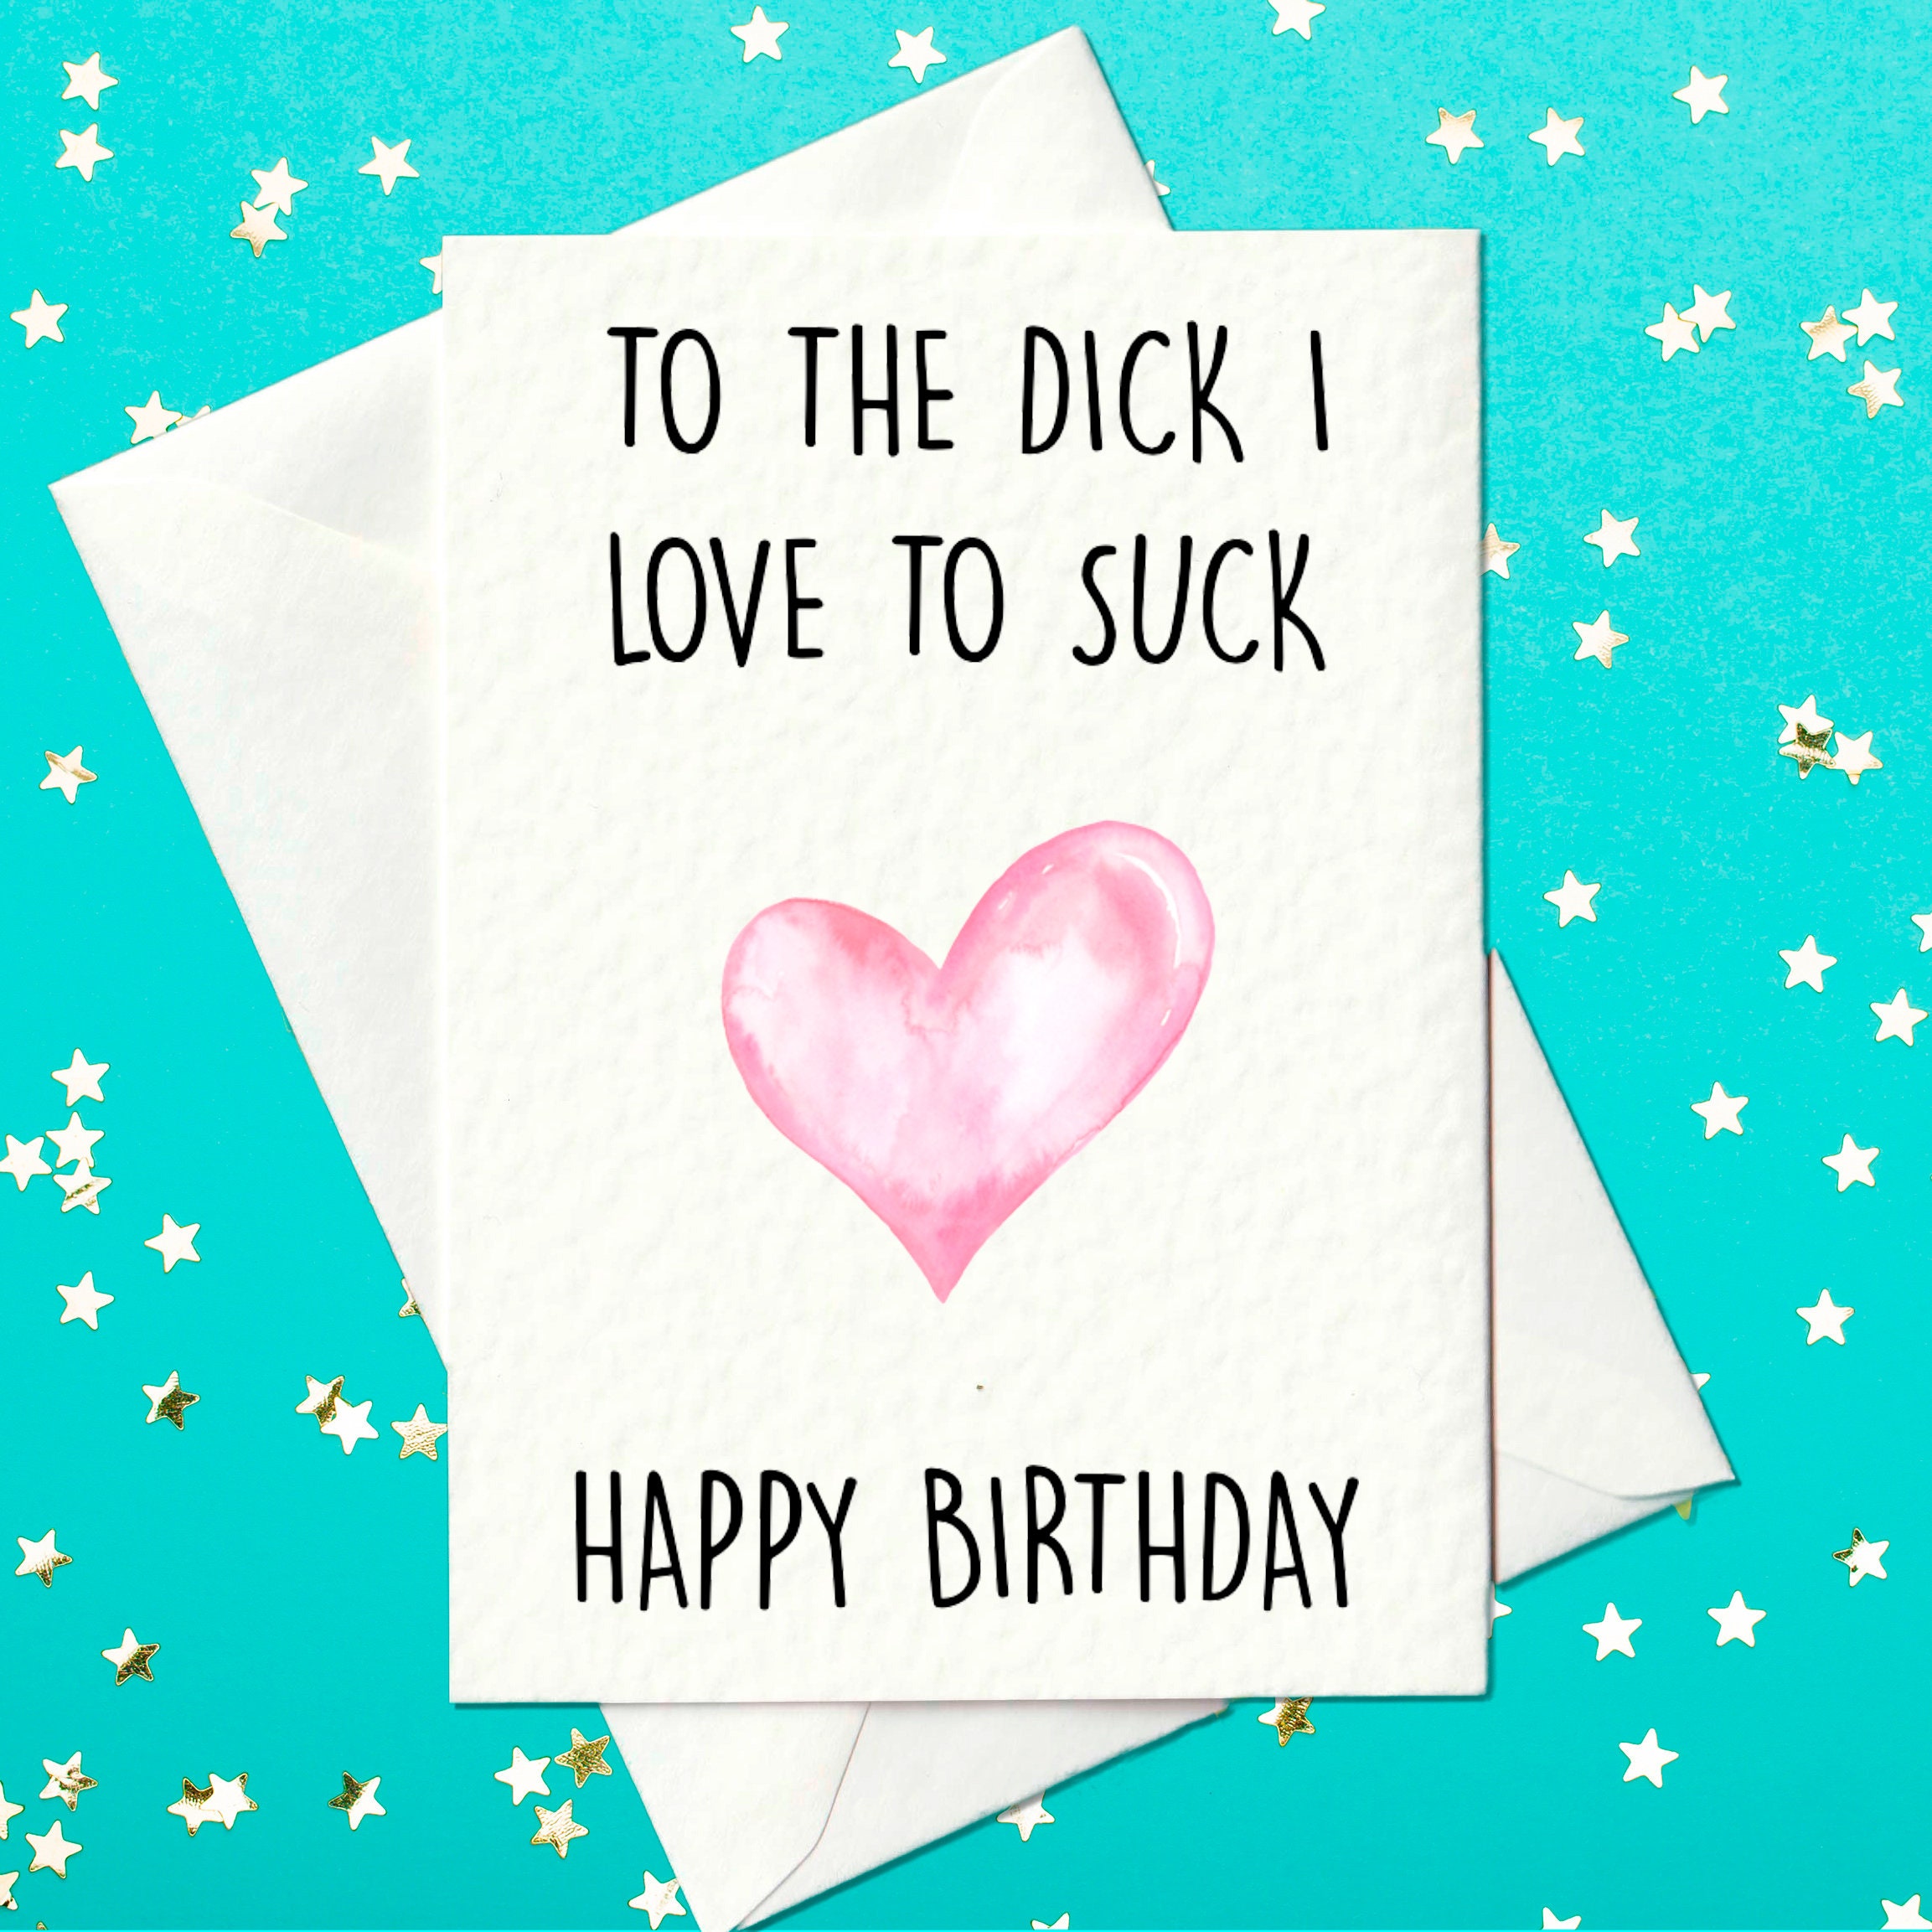 Happy Birthday to the Dick I Love to Suck